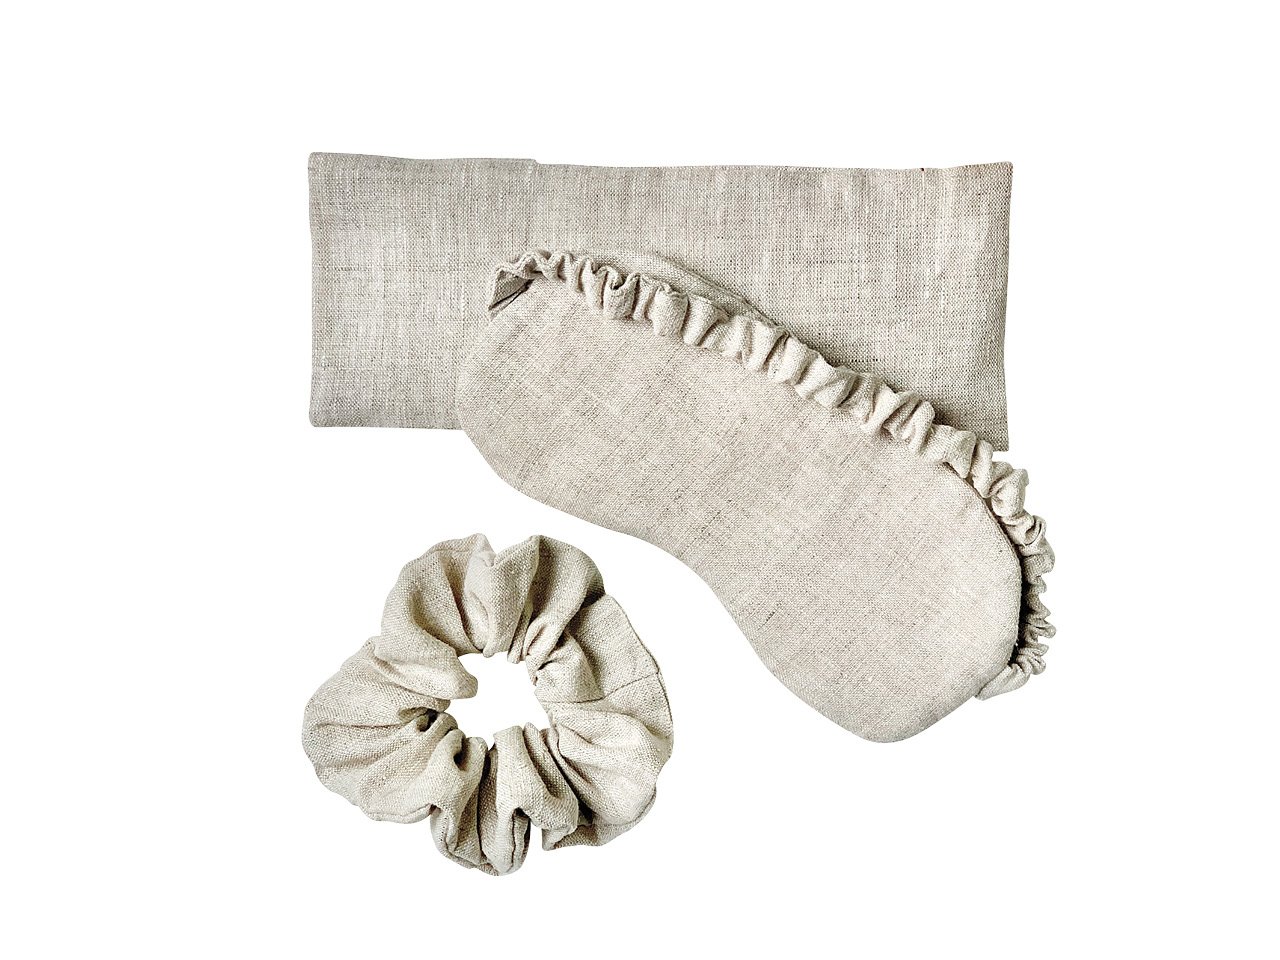 Matching grey scrunchie, sleep mask and pillow.